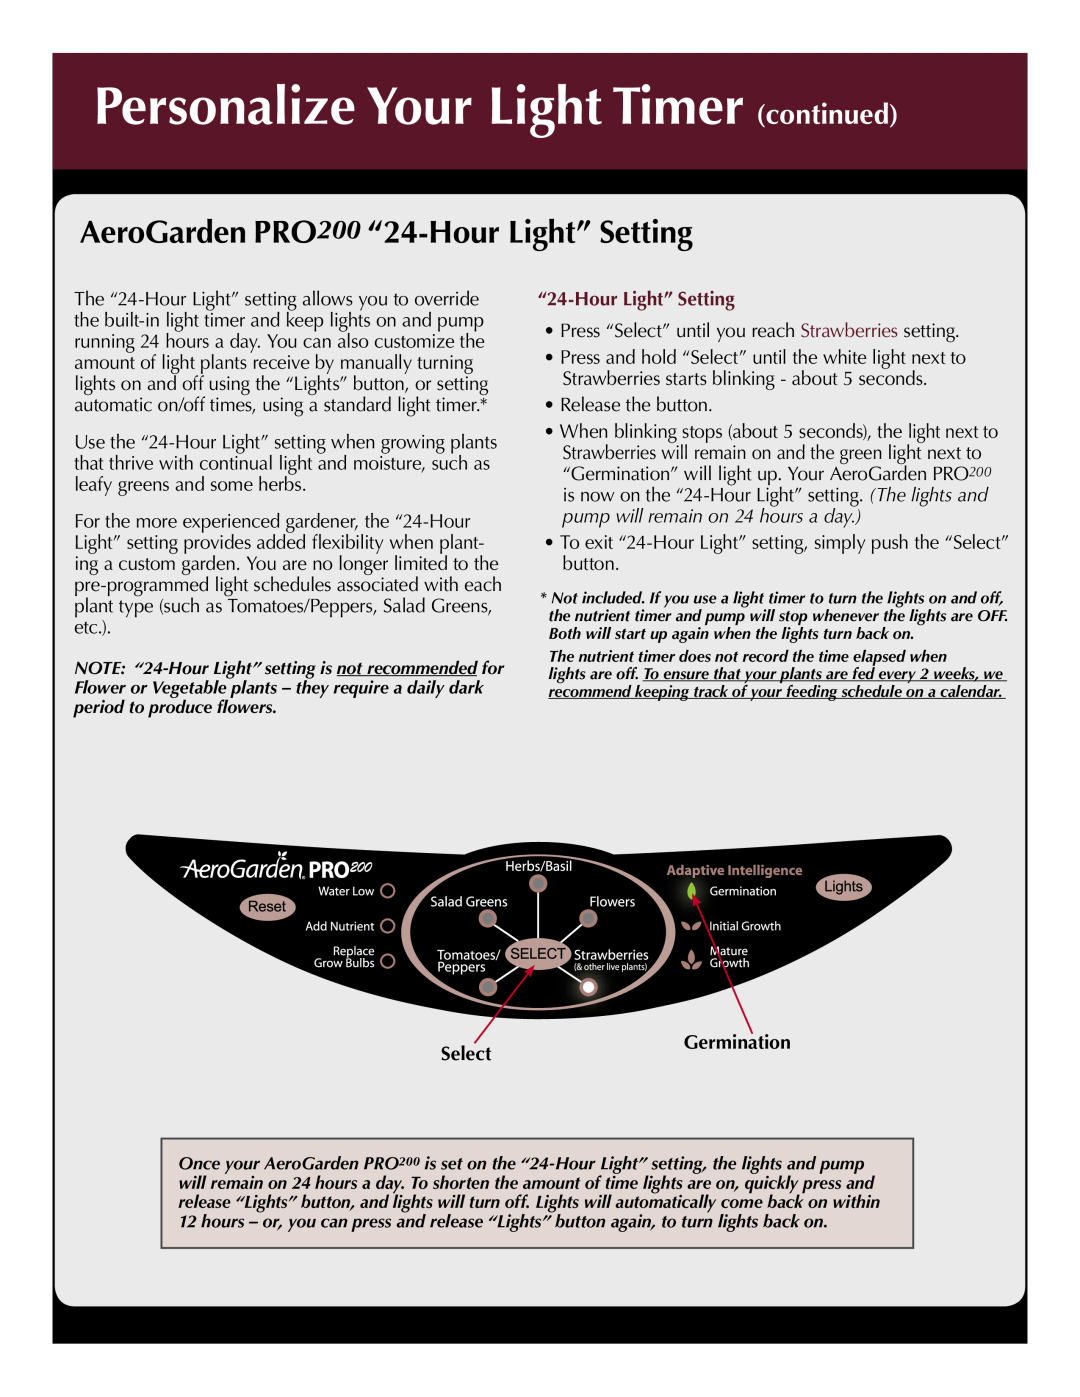 AeroGarden Personalize Your Light Timer continued, AeroGarden PRO200 “24-HourLight” Setting, SelectGermination 